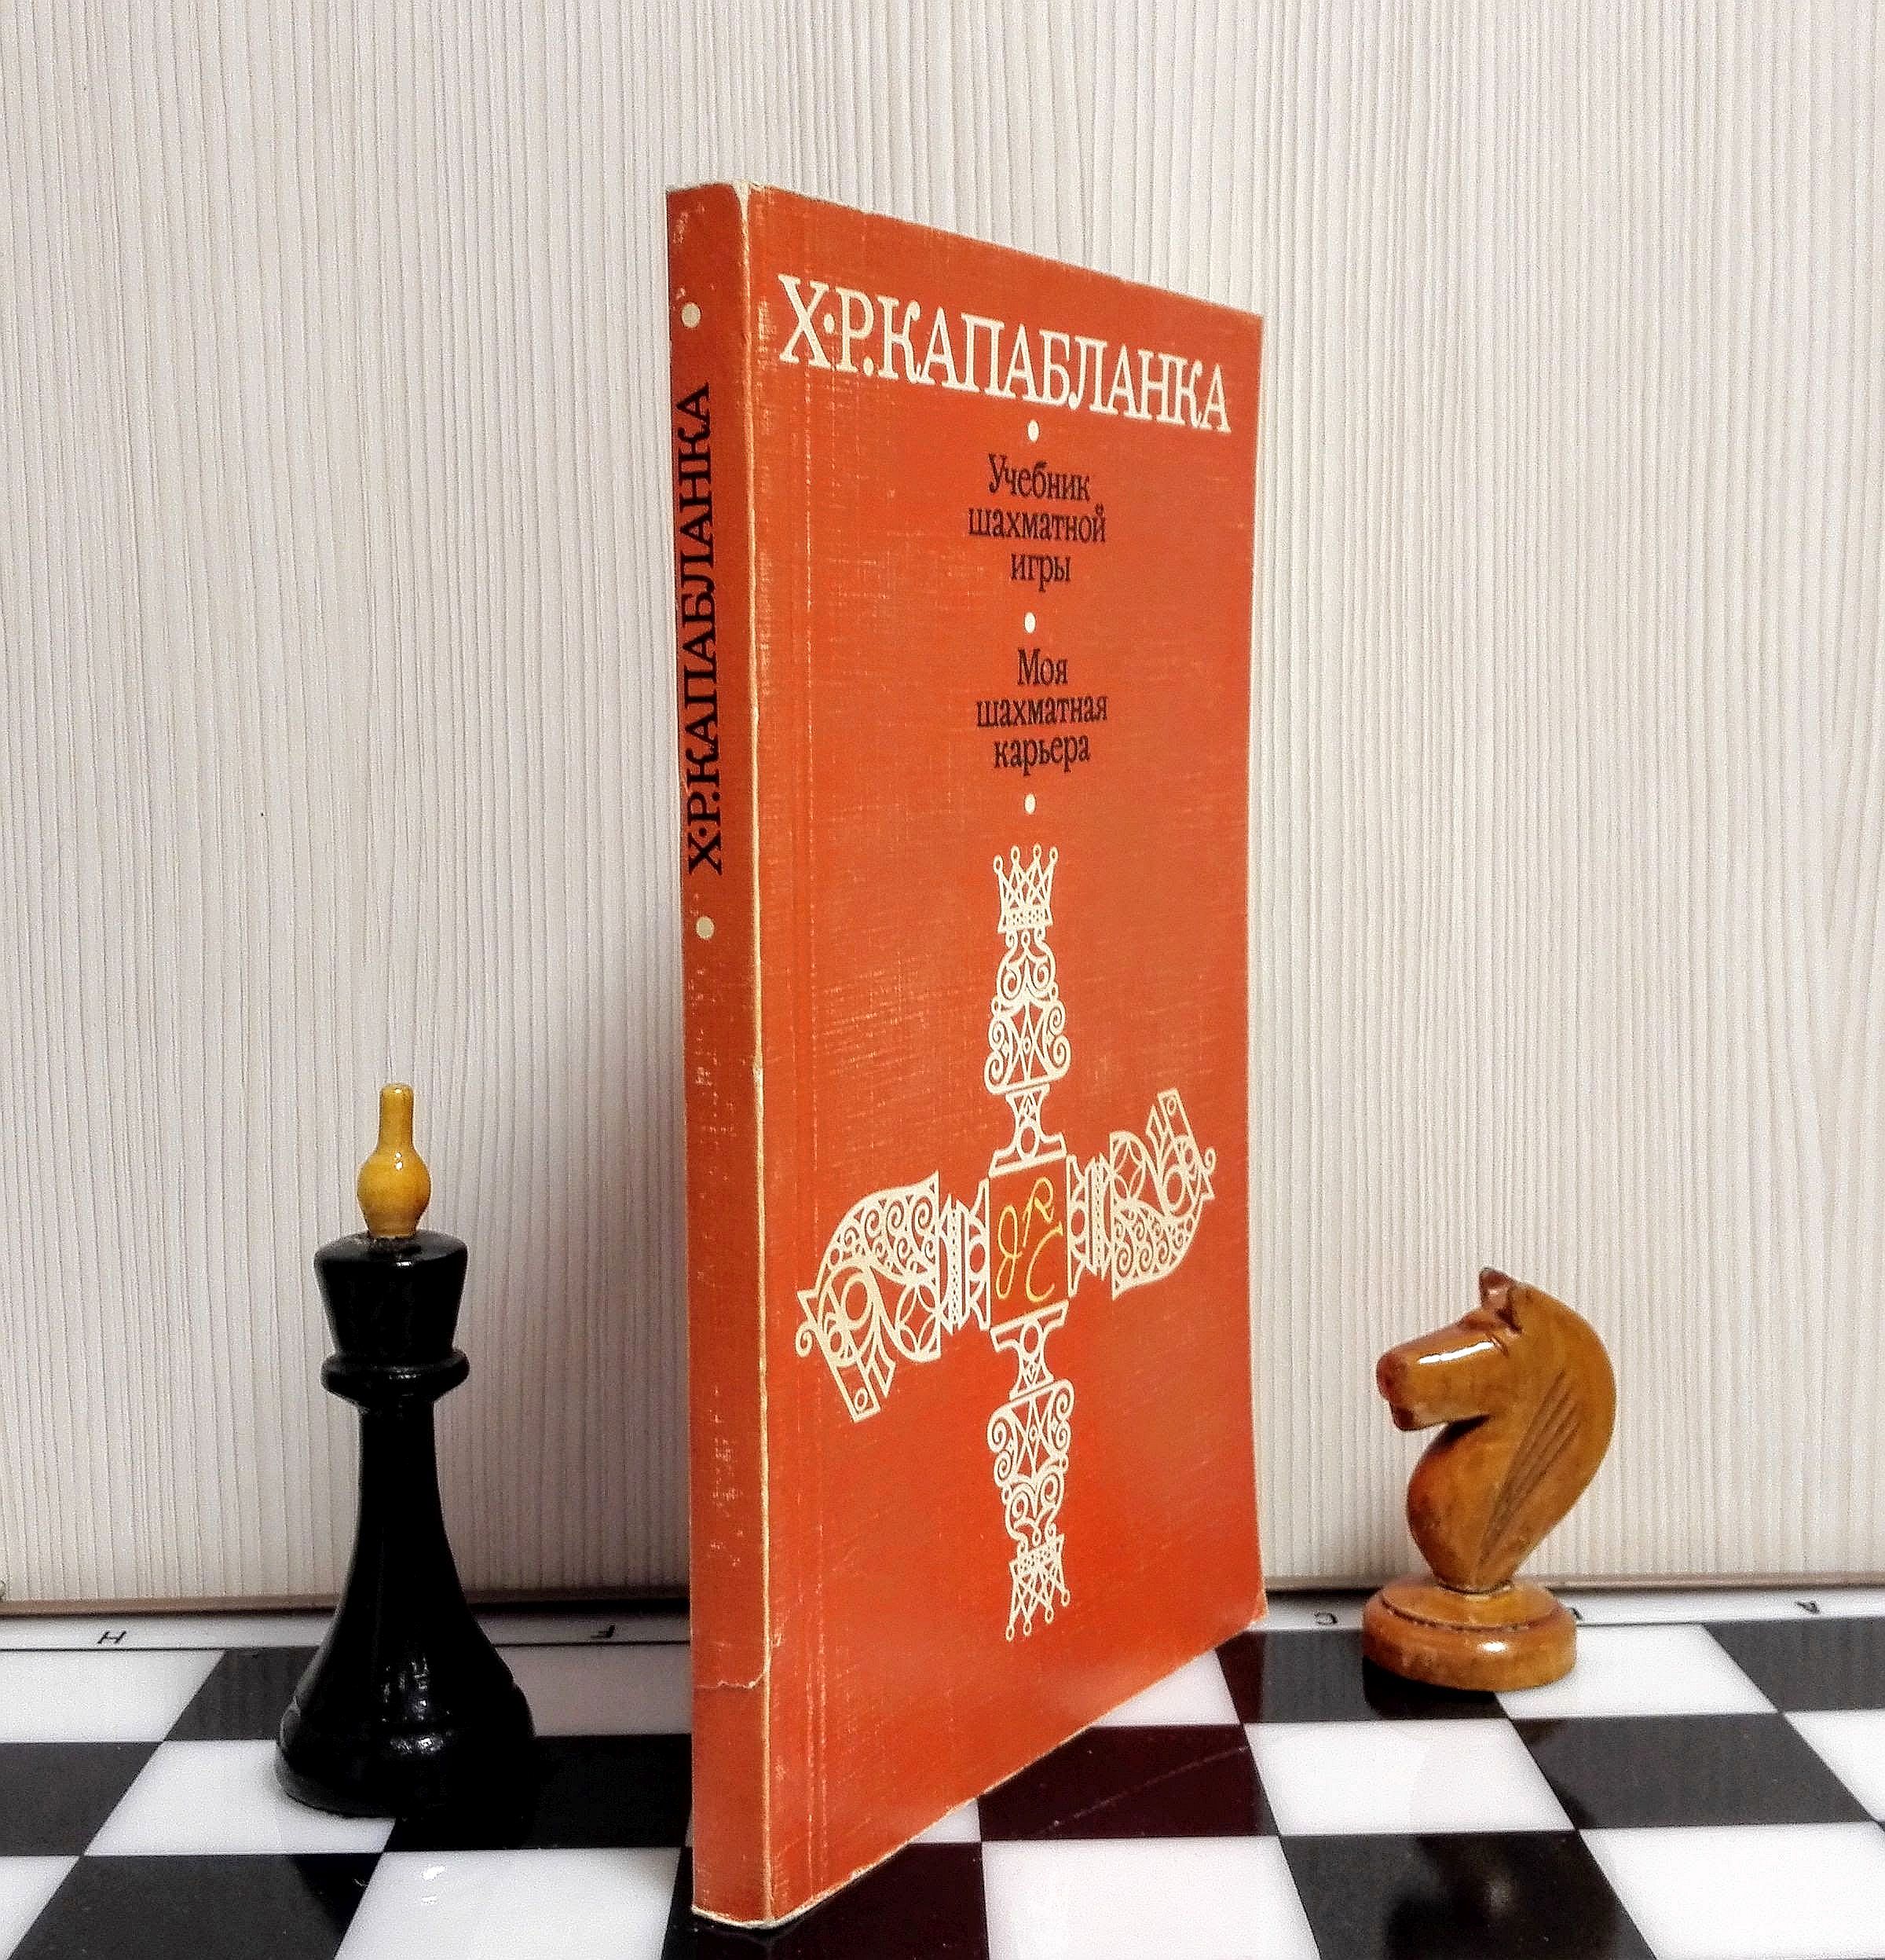 Books by José Raúl Capablanca (Author of Chess Fundamentals)